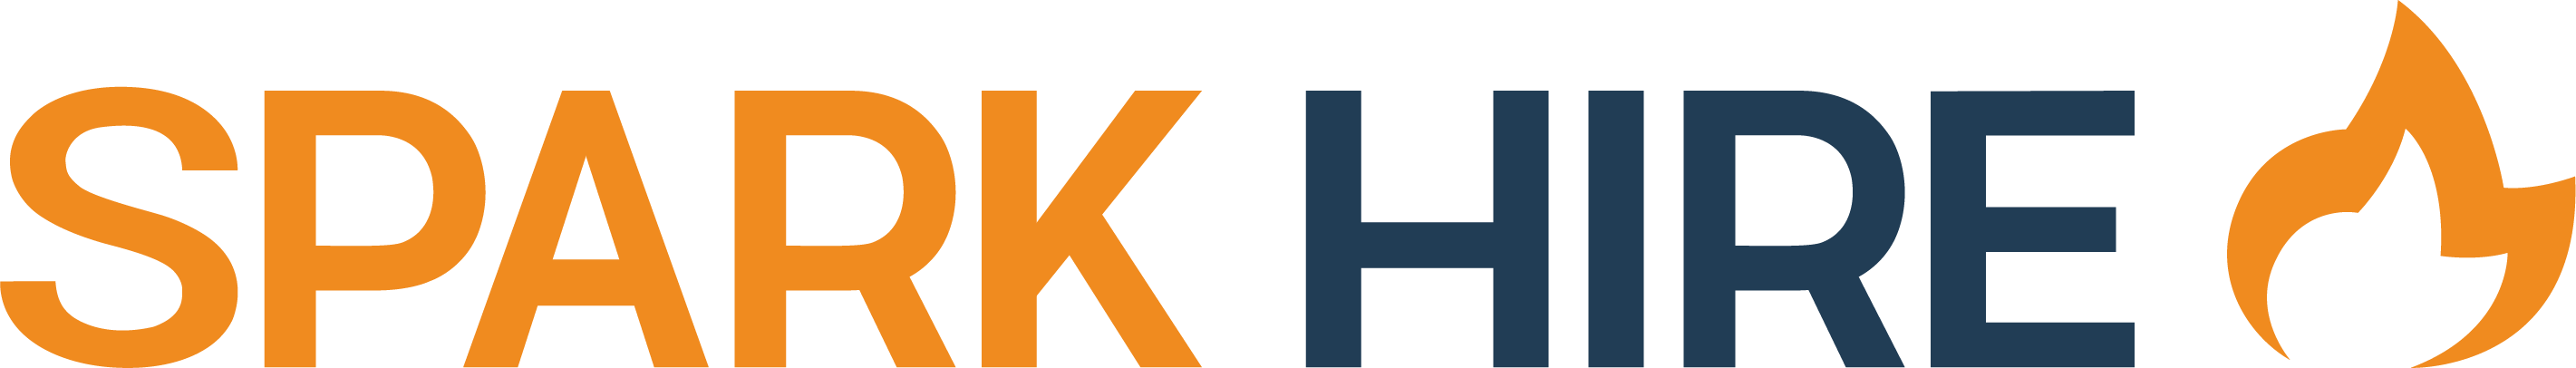 Spark Hire Logo - Orange and Blue (1)